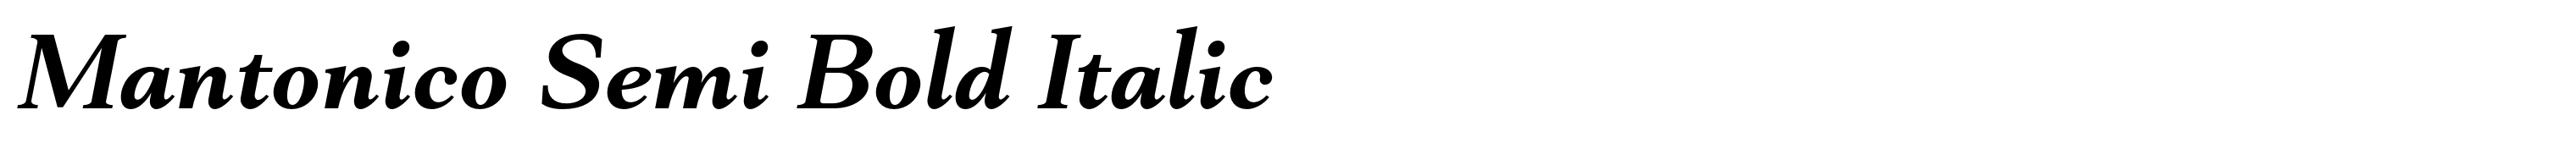 Mantonico Semi Bold Italic